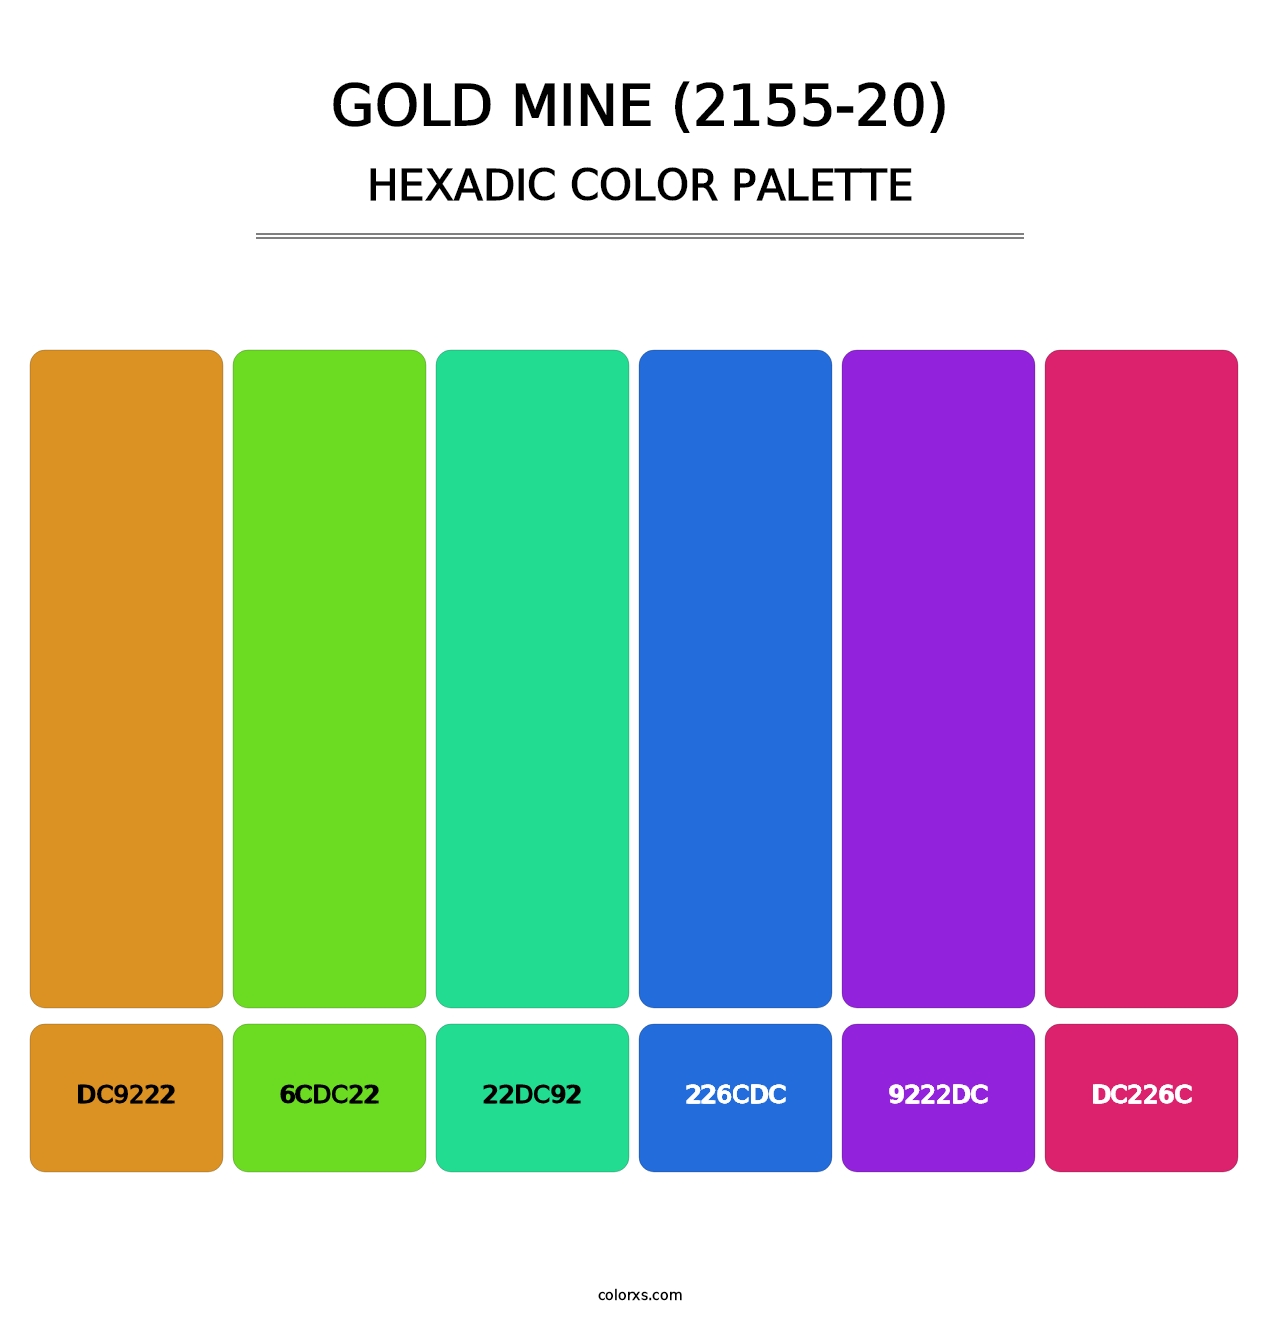 Gold Mine (2155-20) - Hexadic Color Palette